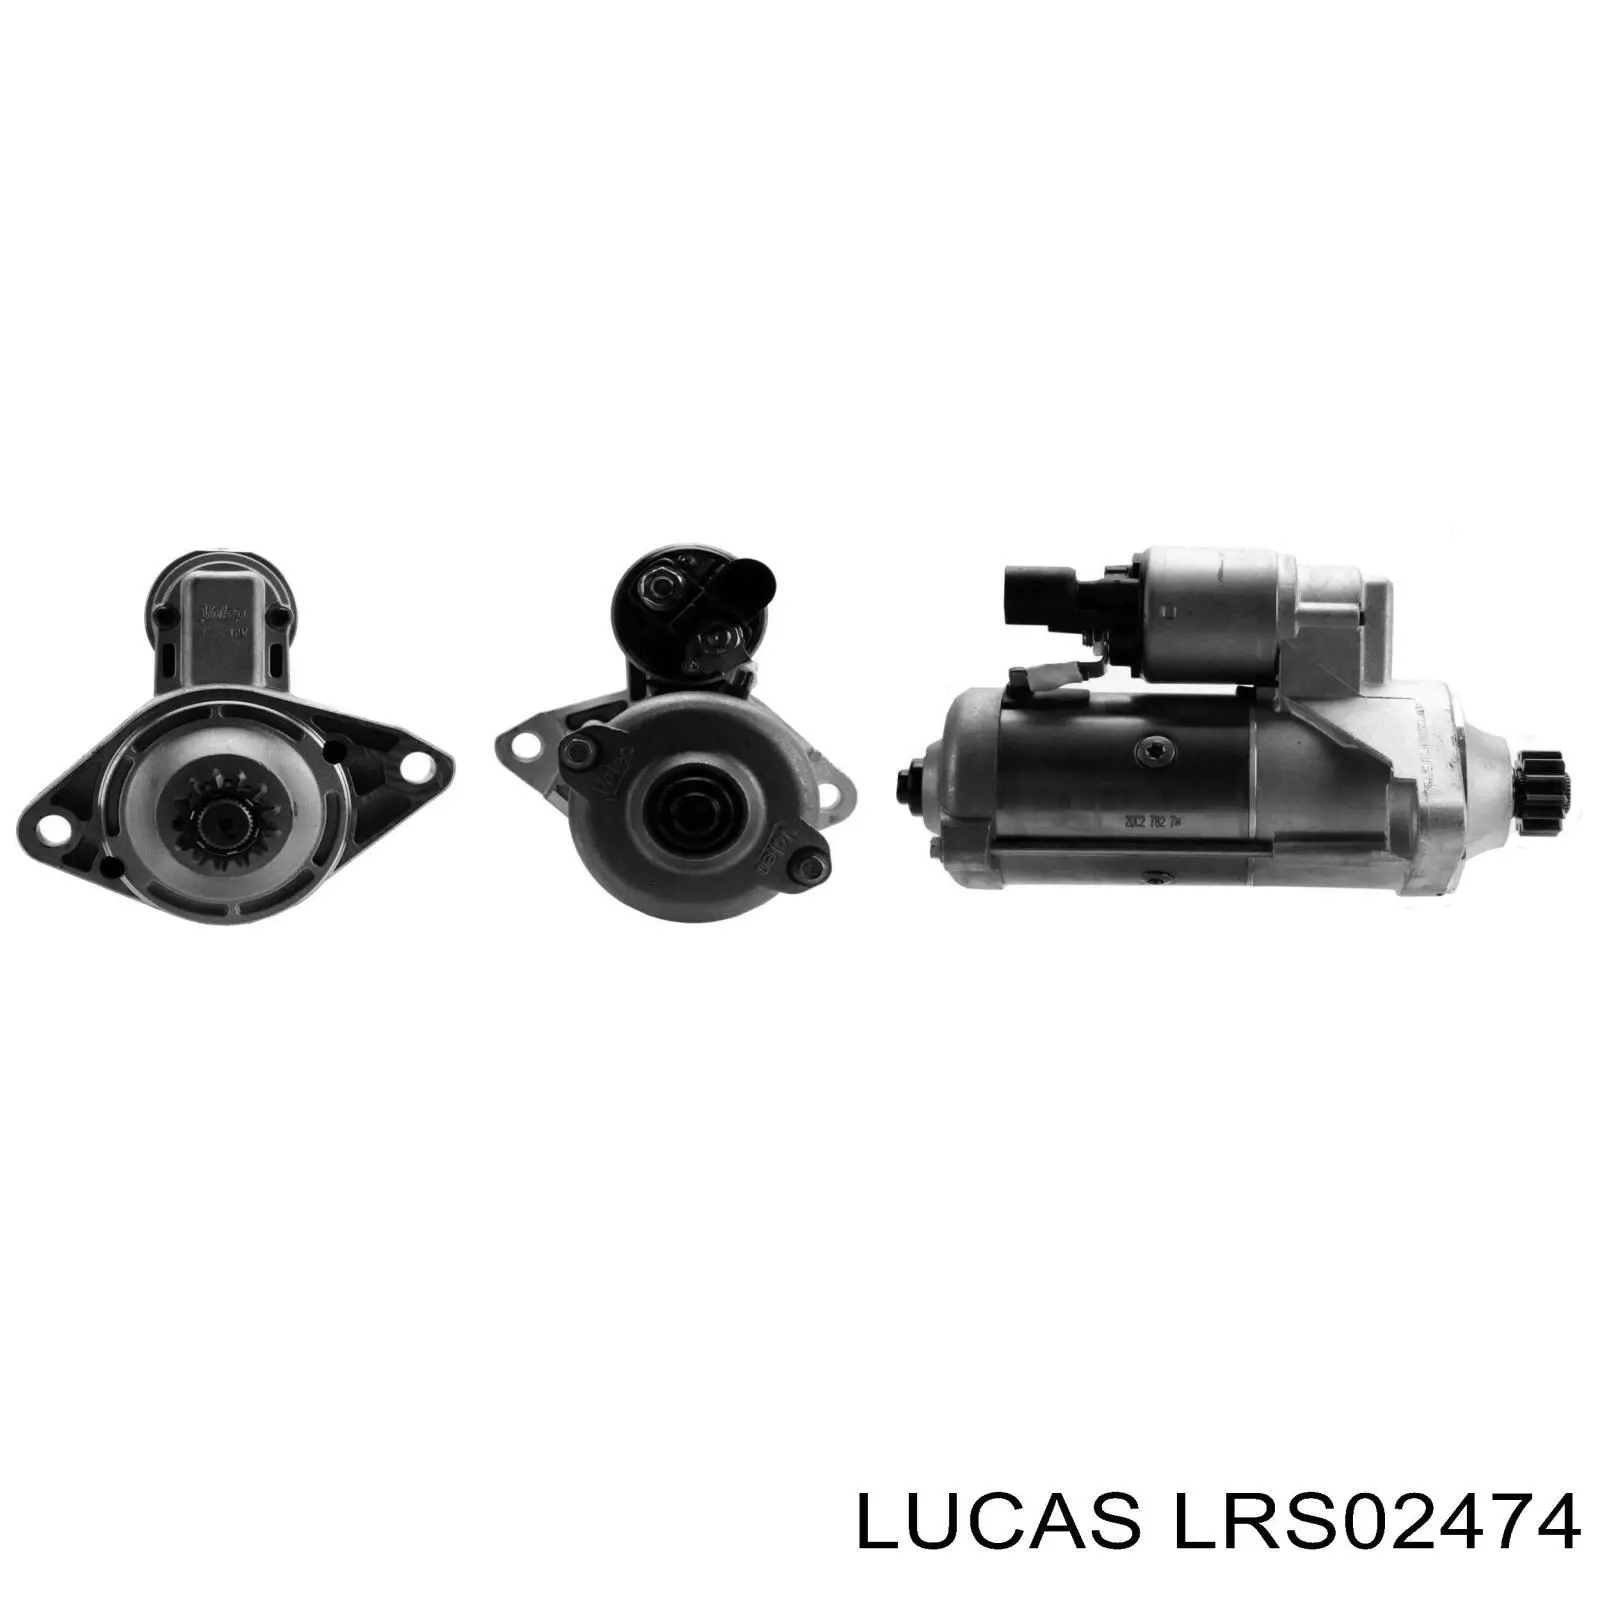 Motor de arranque LRS02474 Lucas